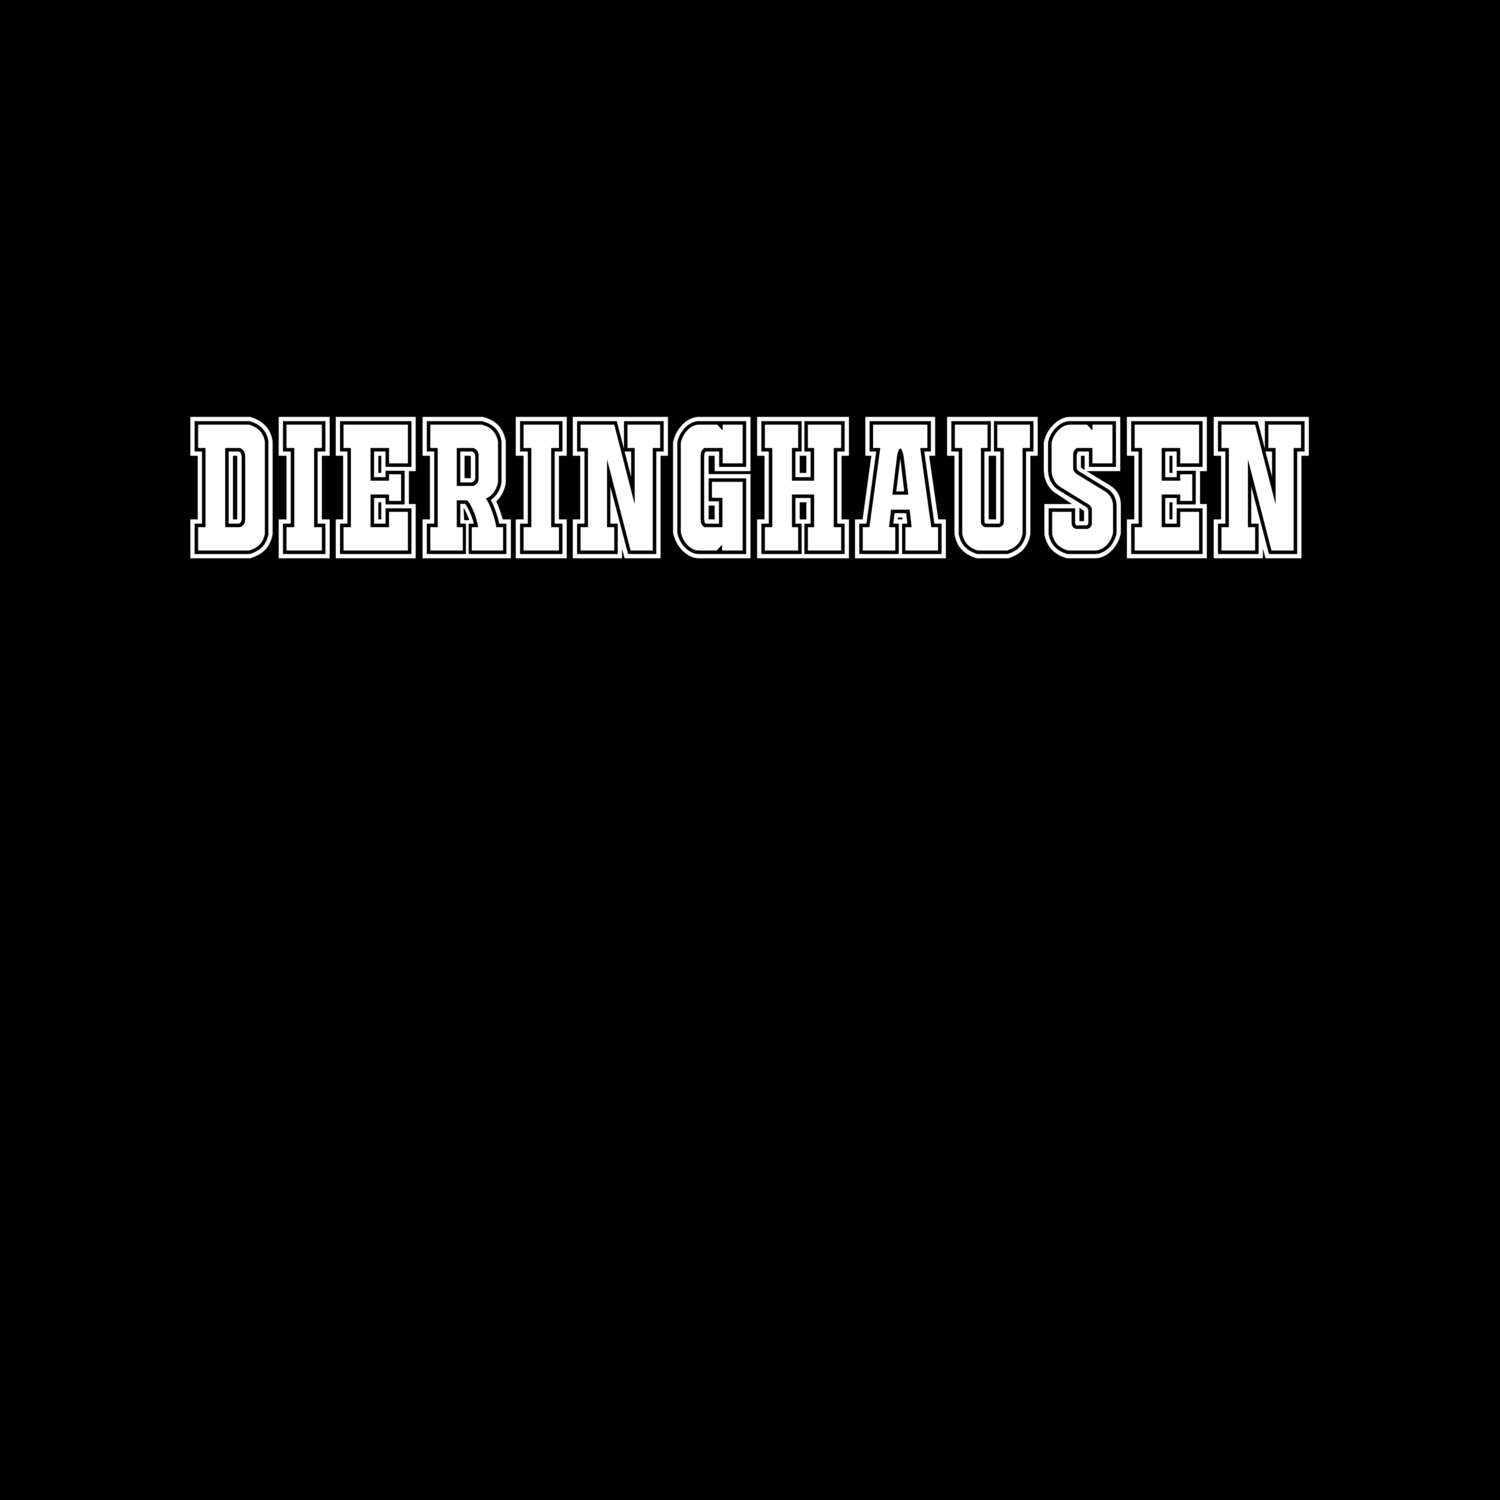 Dieringhausen T-Shirt »Classic«